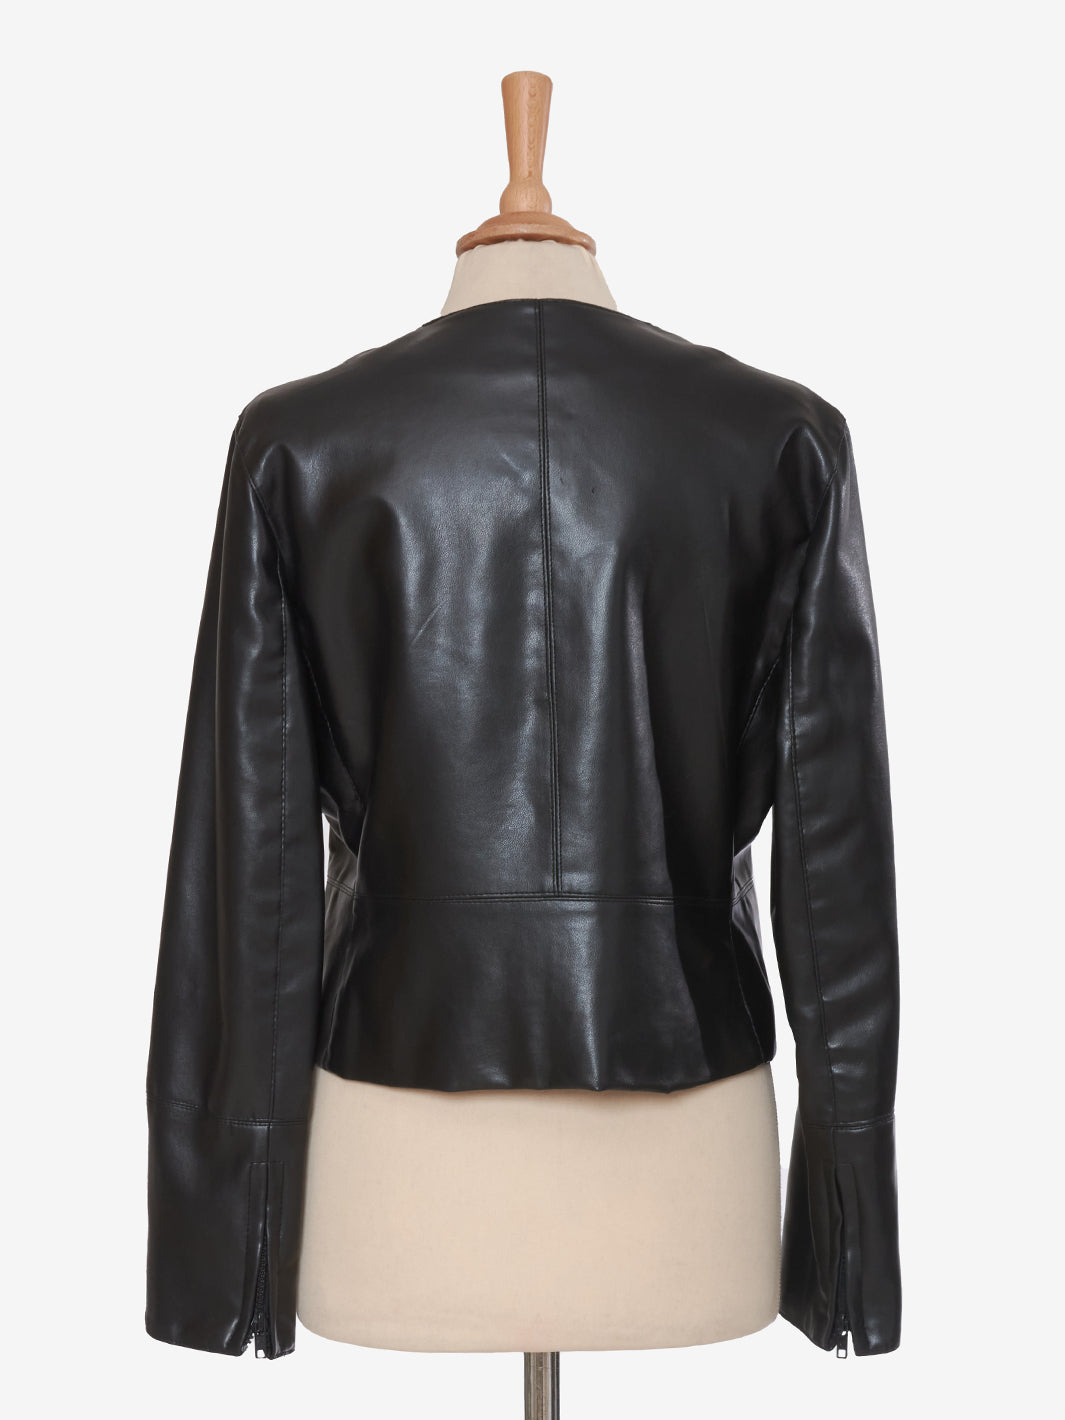 Vintage black faux leather jacket